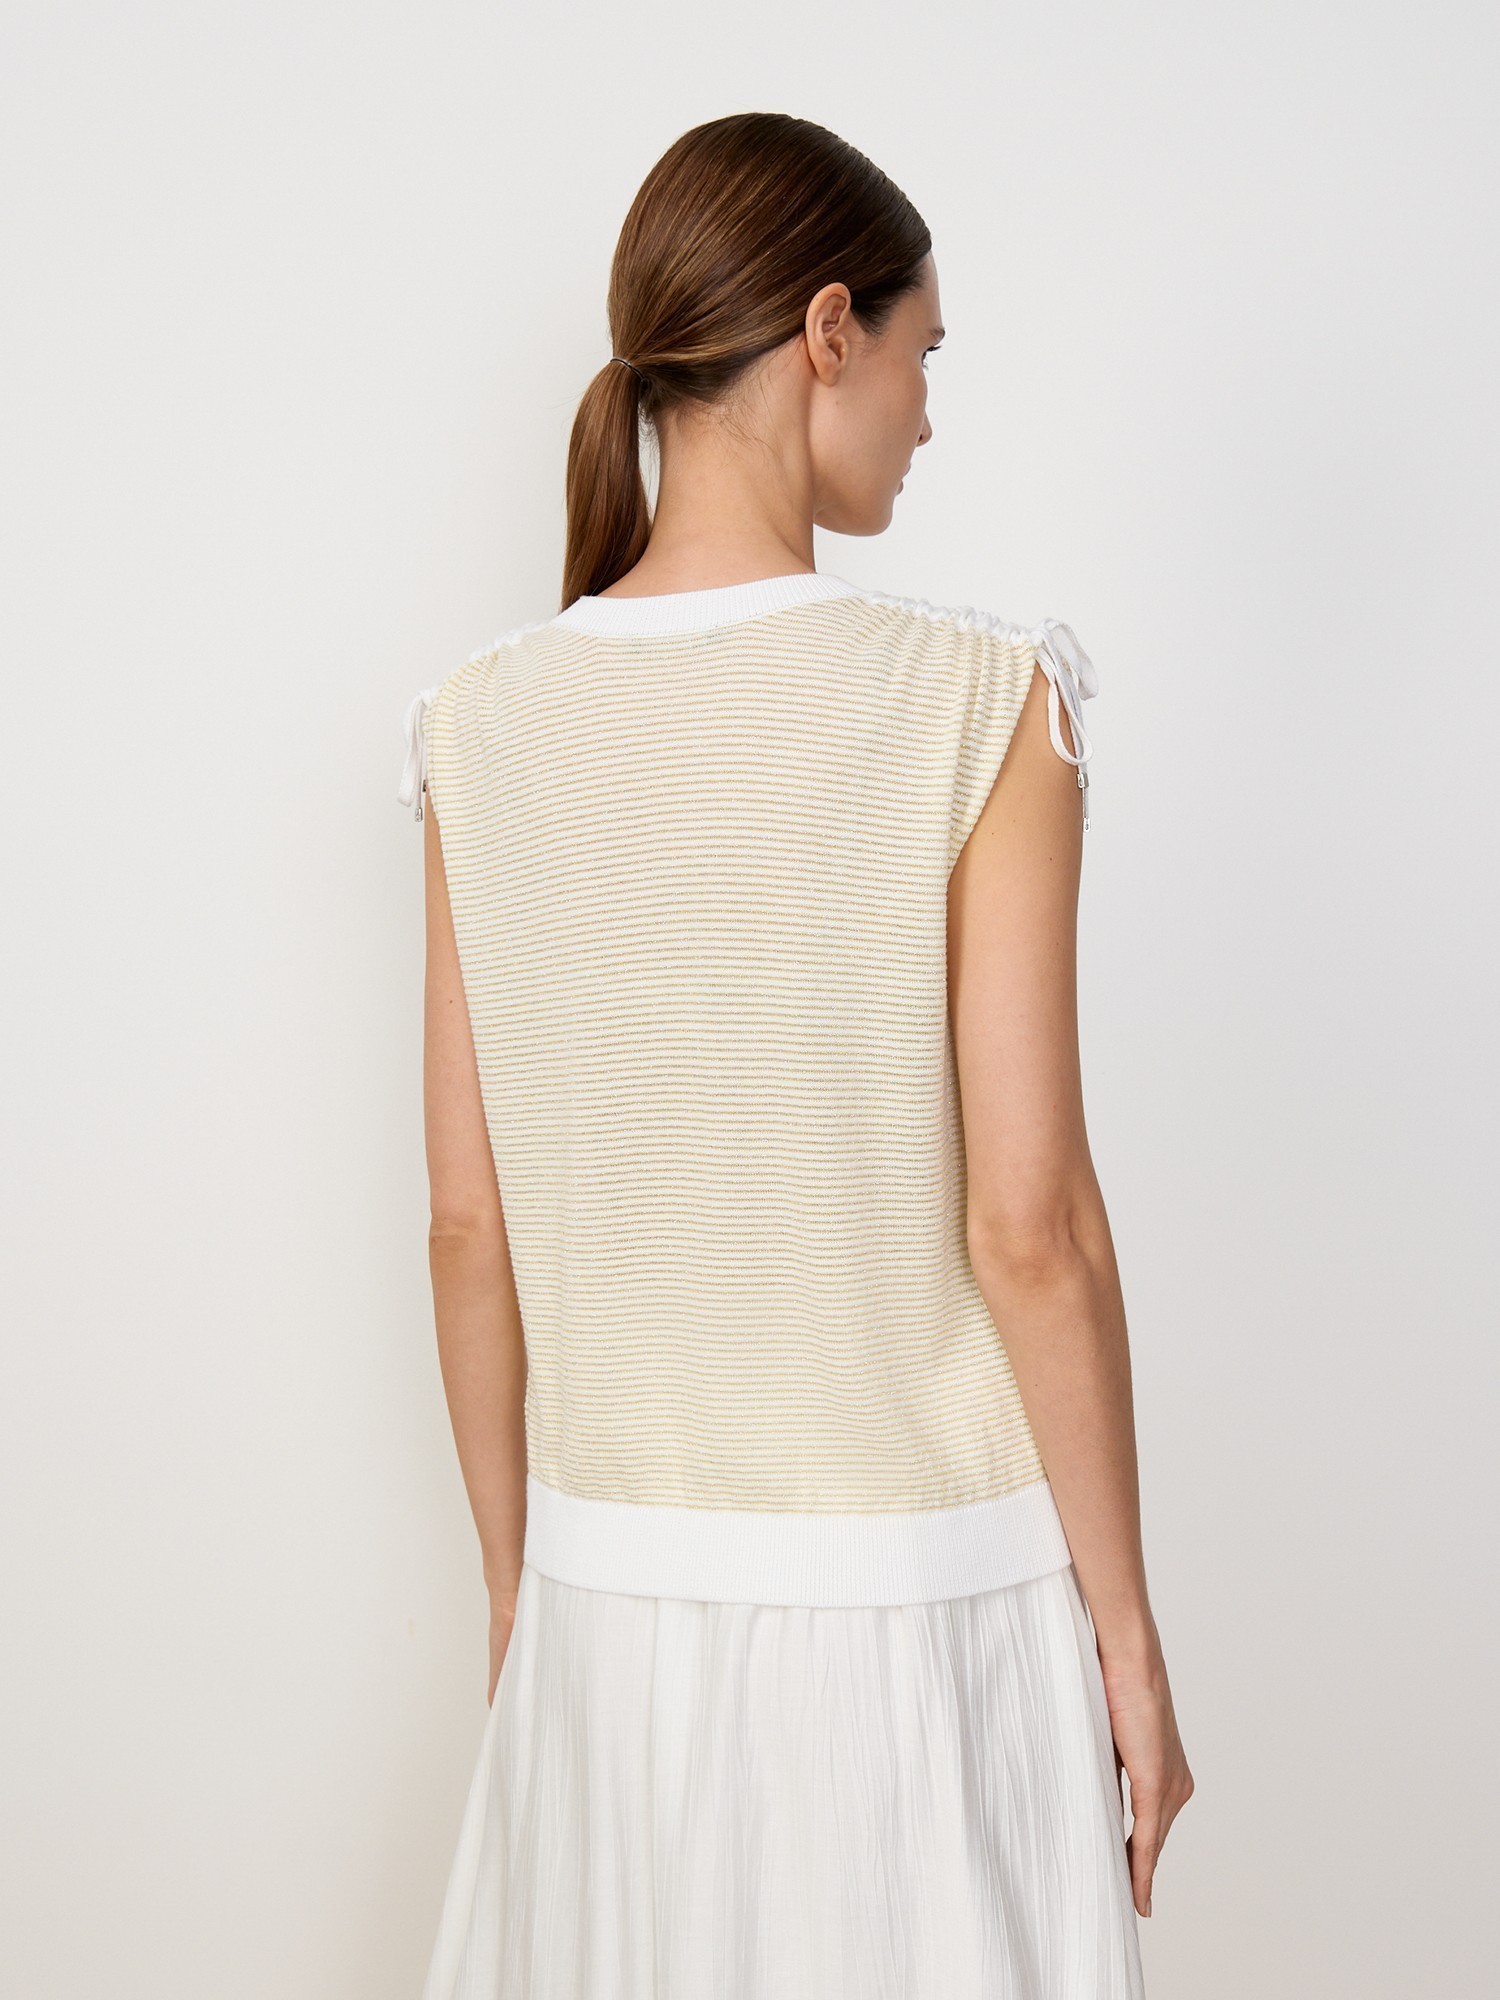 Вязаная блуза с люрексом Elis BL1054V, цвет жёлто-белый, размер 44 - фото 4